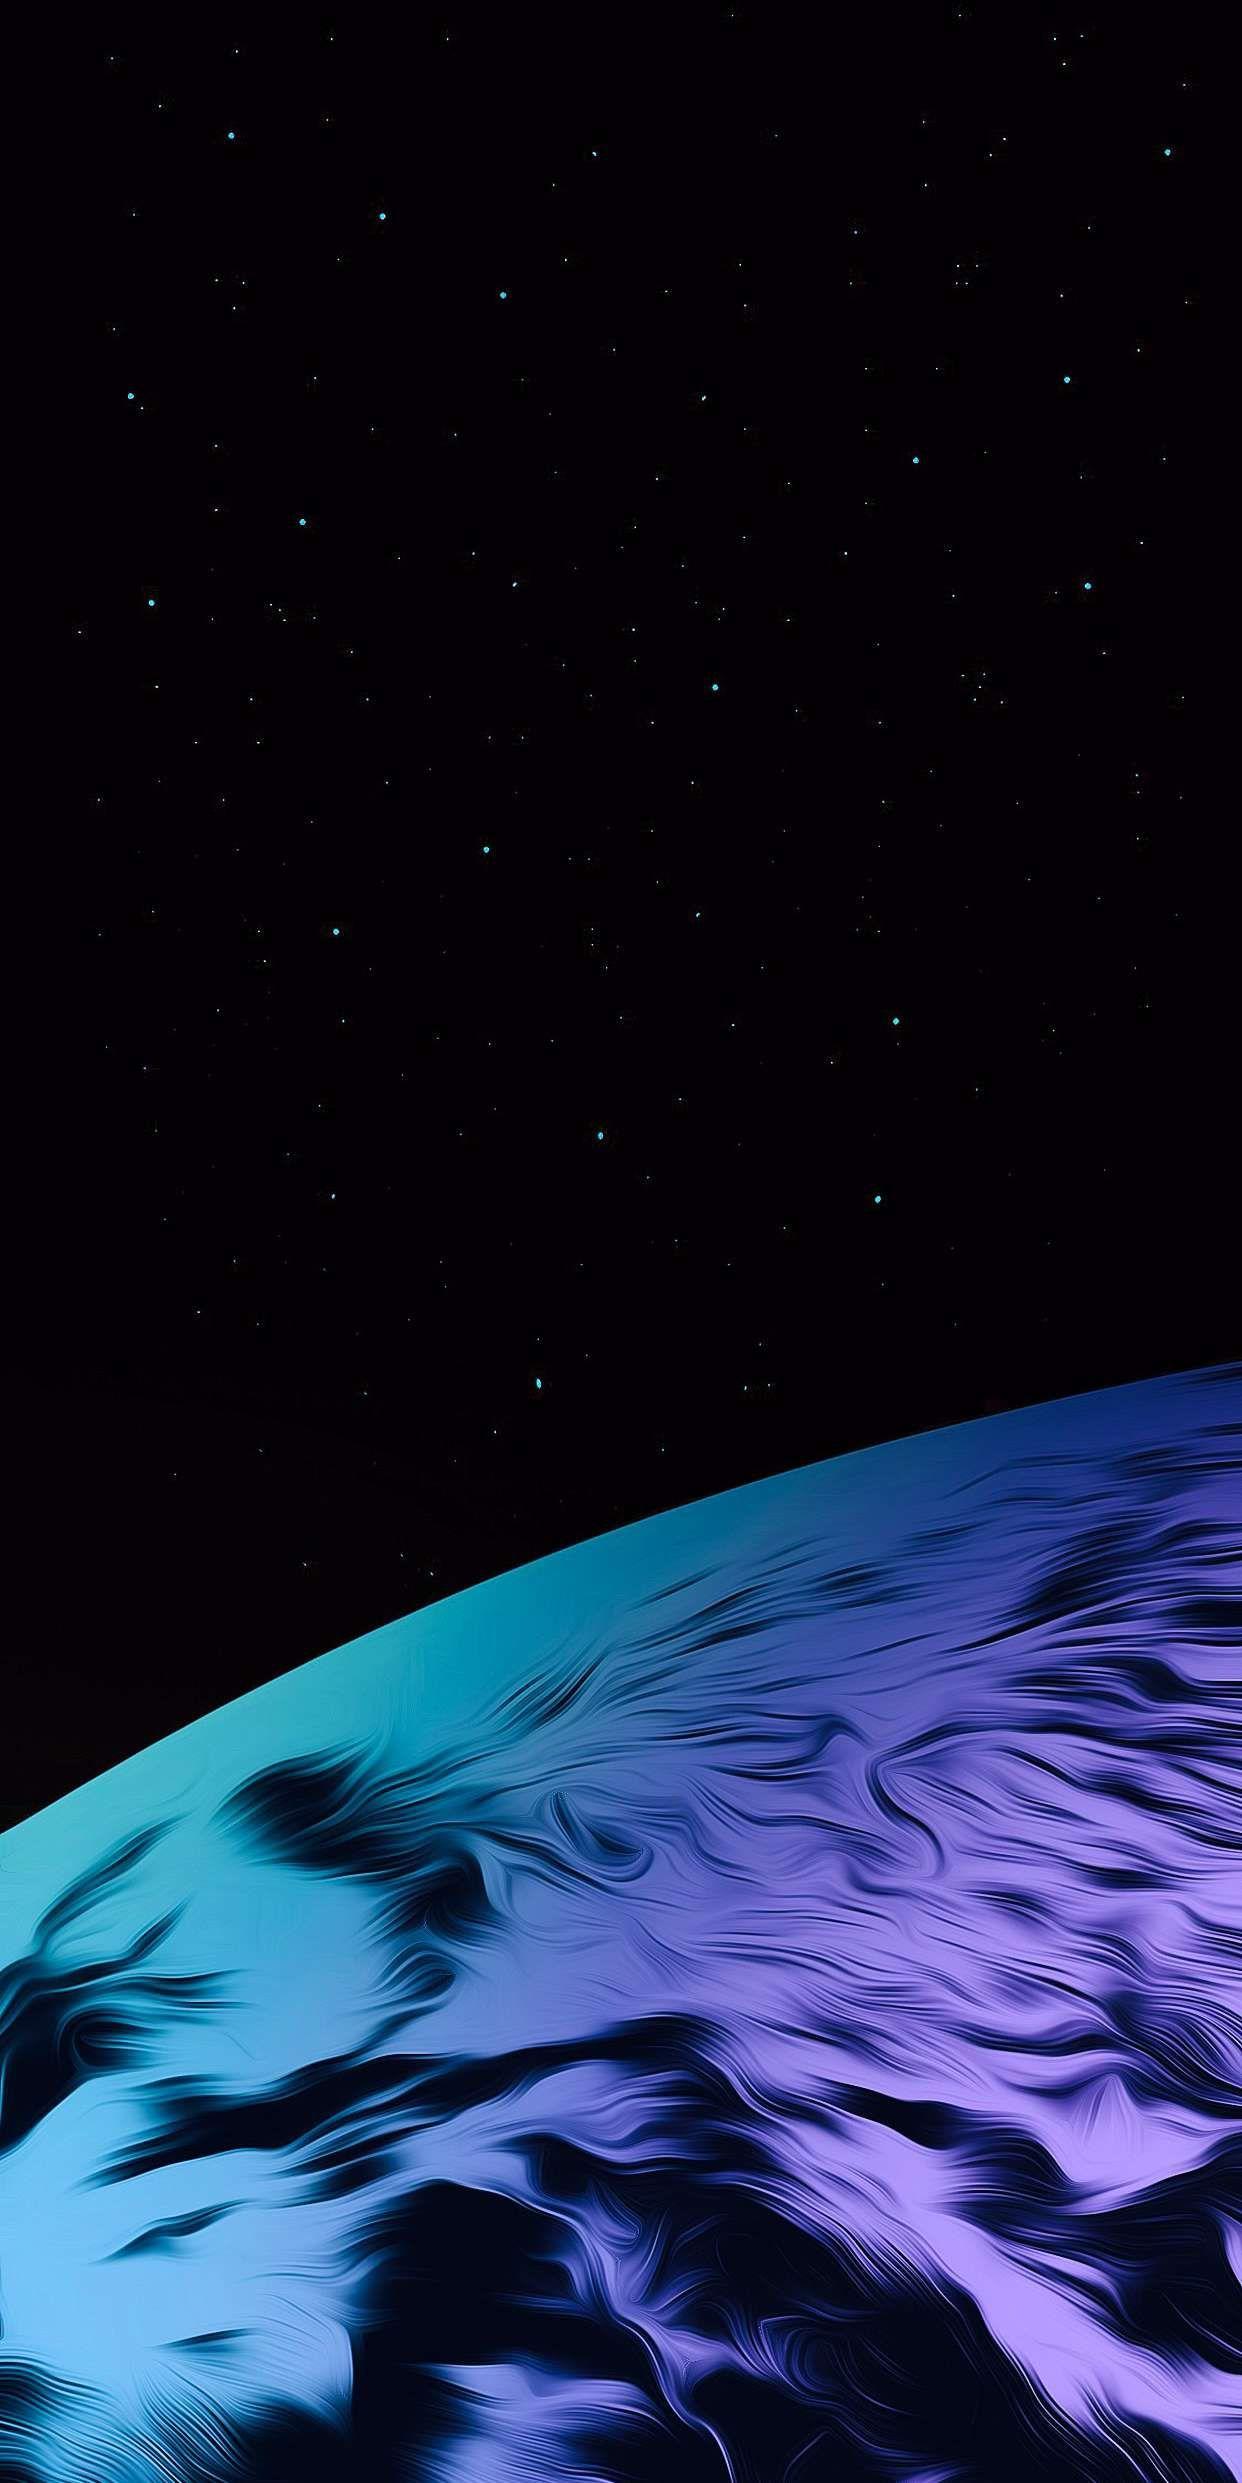 BLUE MOON iPhone Wallpaper. Planets wallpaper, iPhone wallpaper